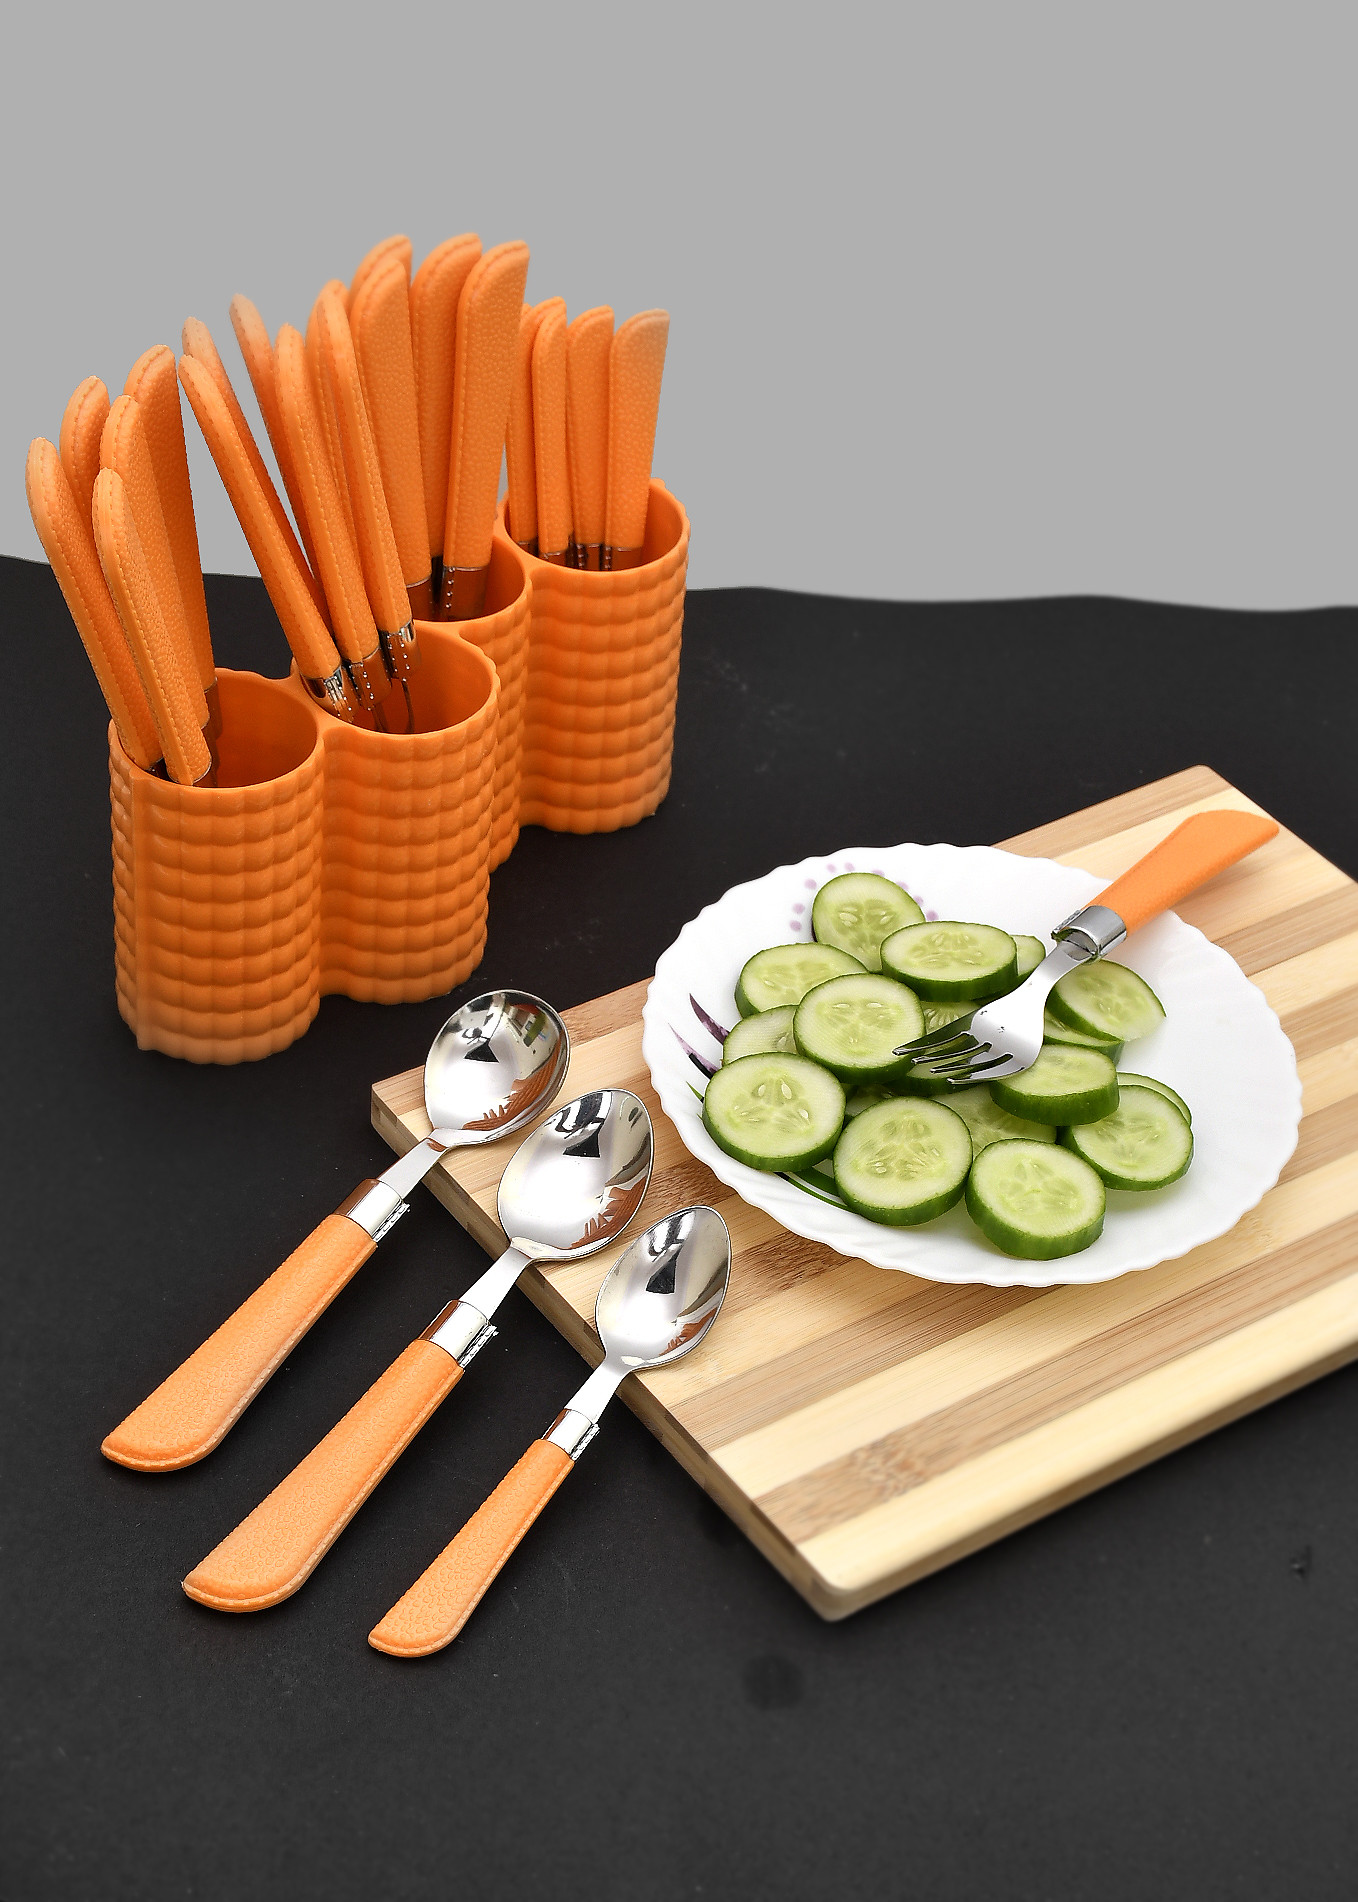 Kuber Industries ABS Plastic & Stainless Steel Nice Cutlery Set, 6 Dessert Spoon, 6 Fork, 6 Soup Spoon, 6 Tea Spoon With 1 Stand (Set of 24, Orange)-KUBMART3298